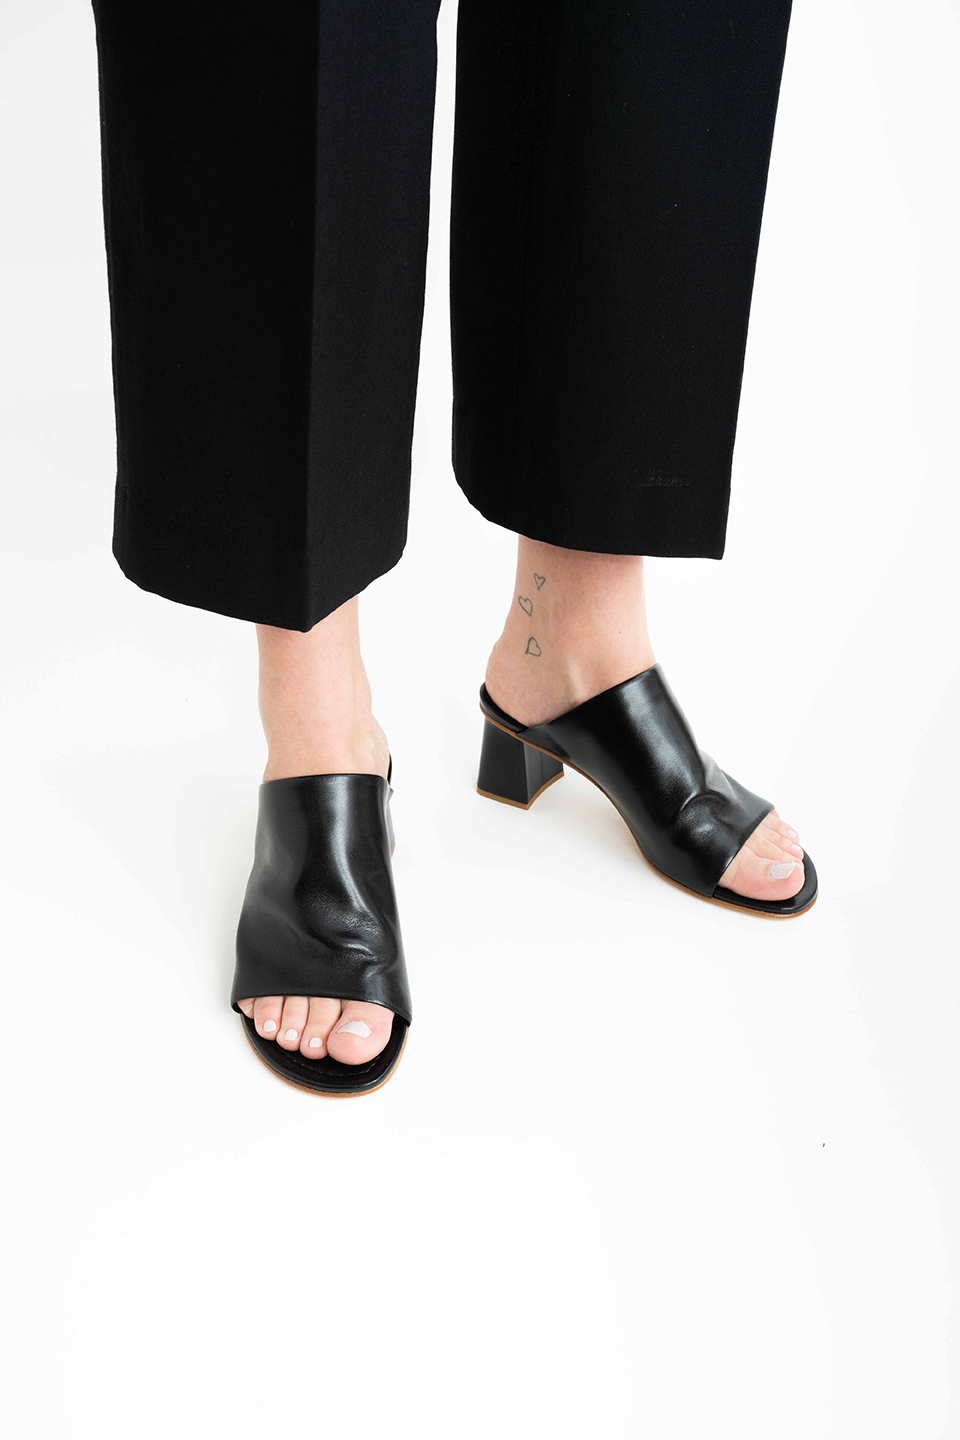 Aida sandaler, sort læder